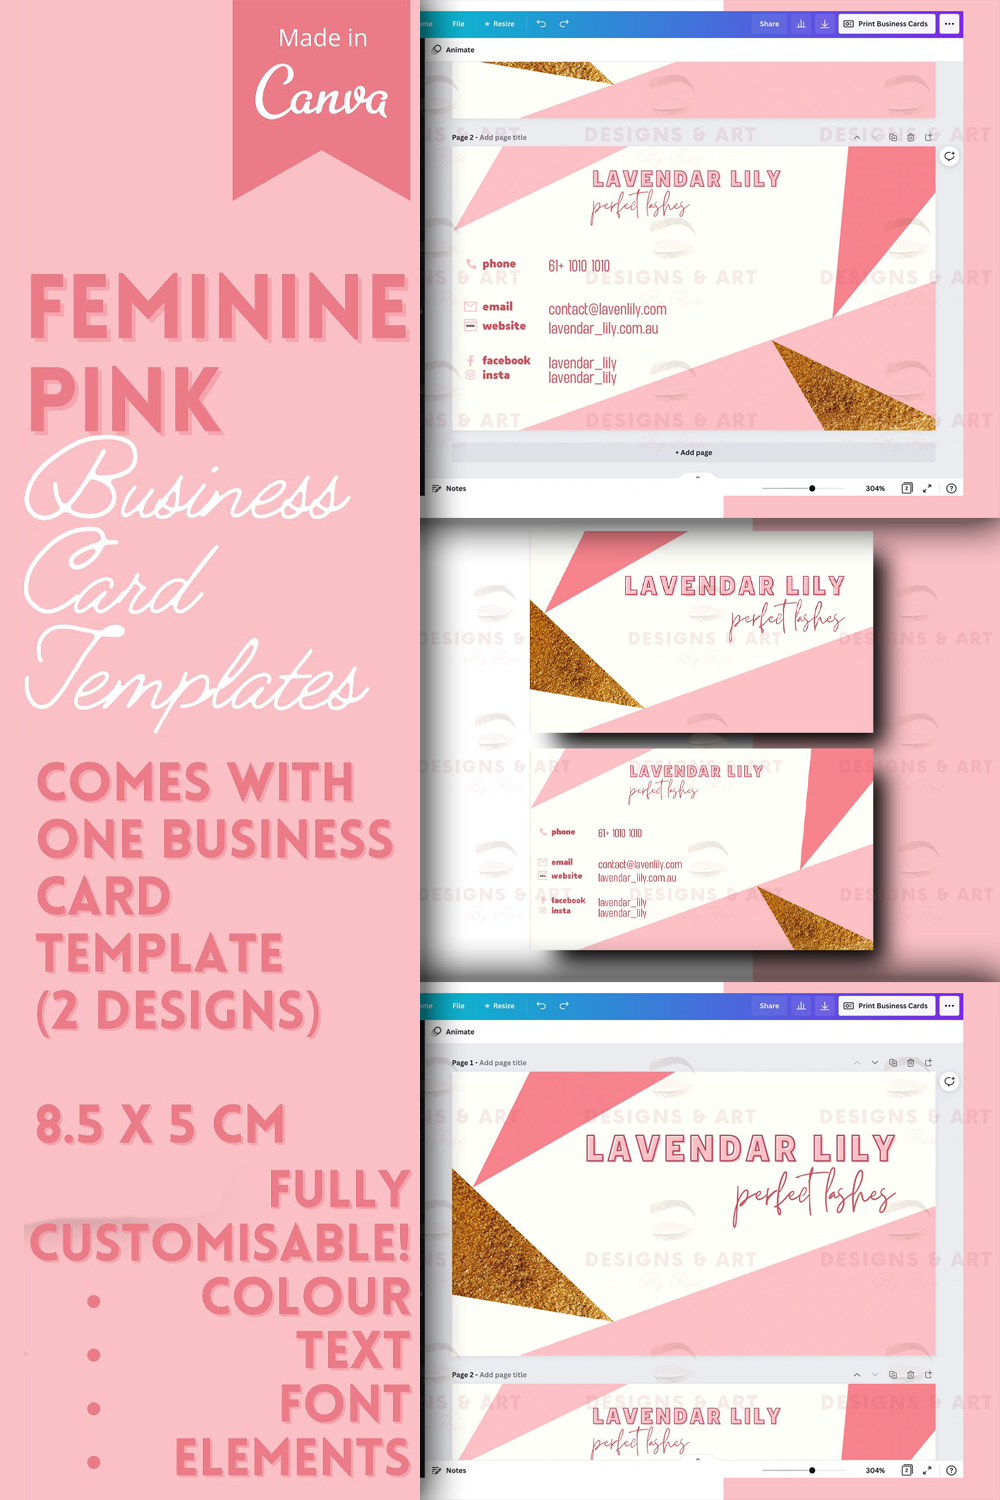 Pink business card templates of pinterest.